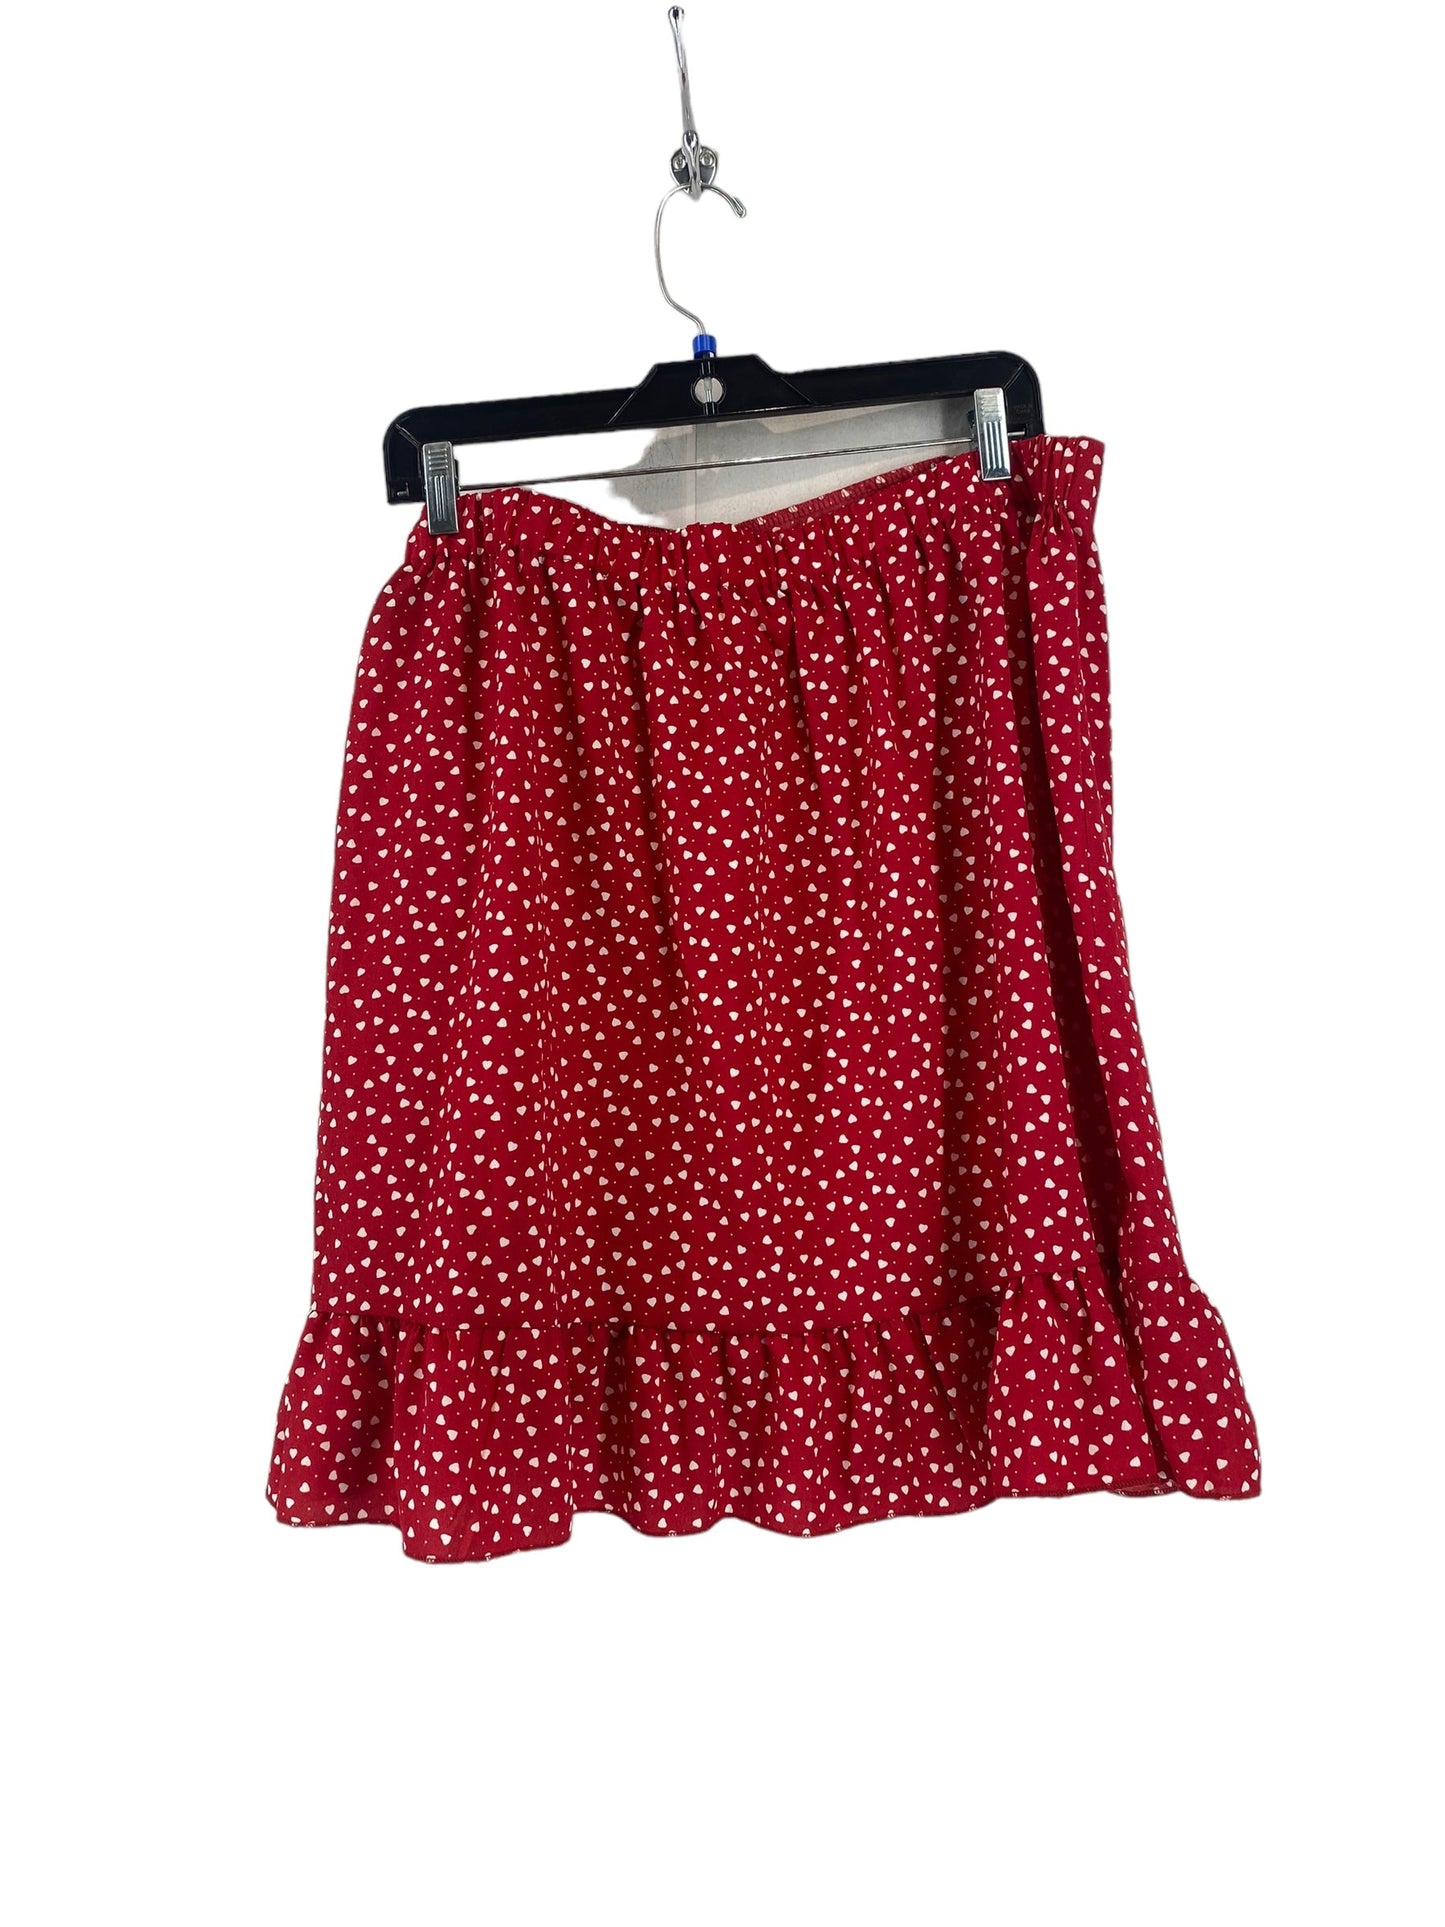 Skirt Mini & Short By Shein  Size: 2x